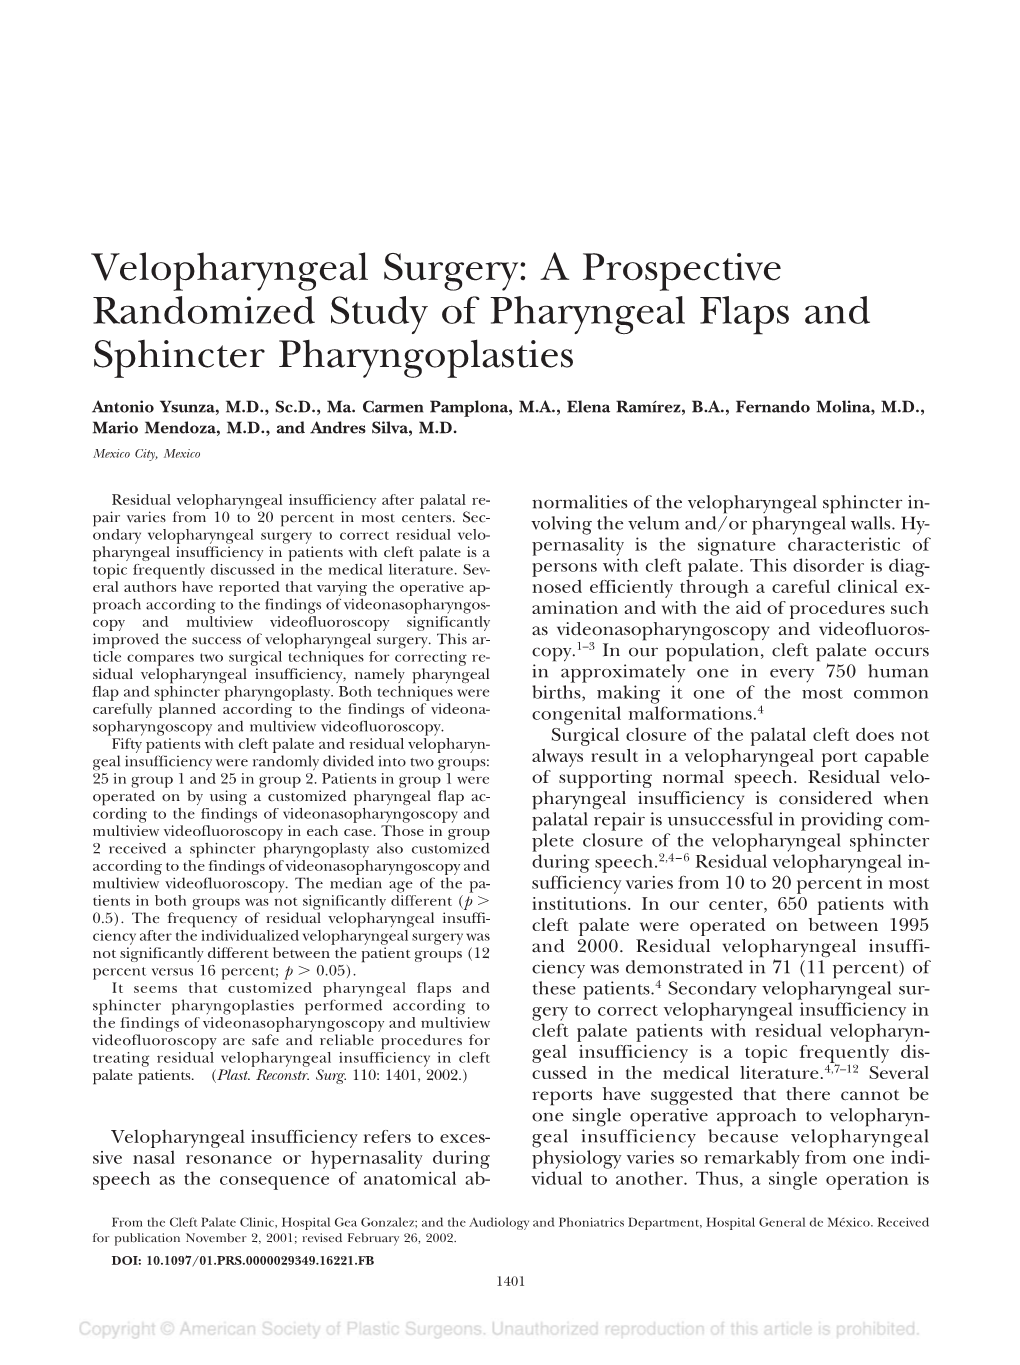 A Prospective Randomized Study of Pharyngeal Flaps and Sphincter Pharyngoplasties